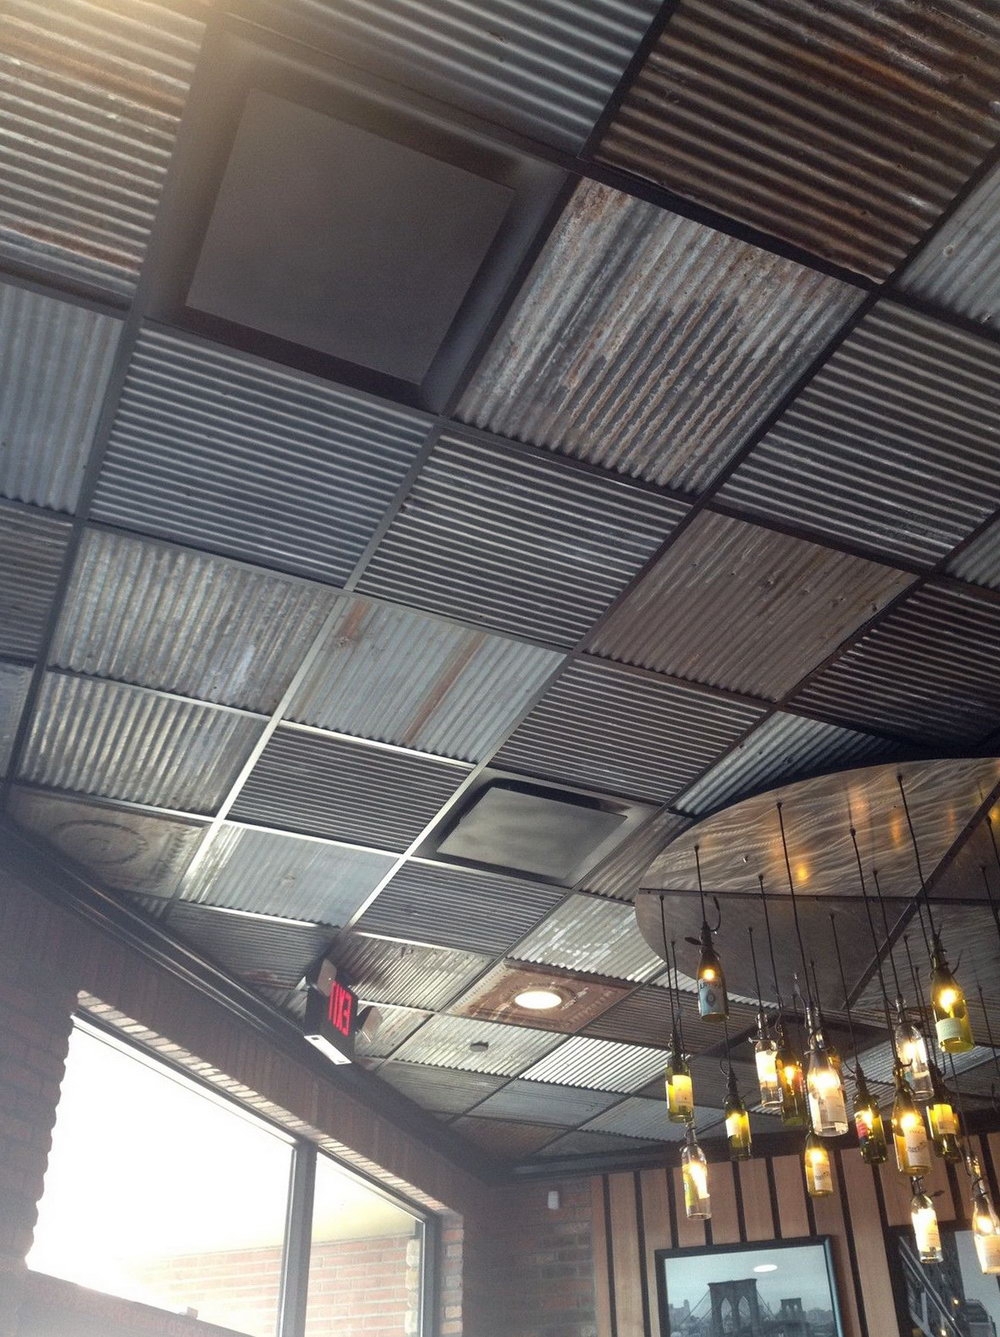 Corrugated Metal Drop Ceiling Tiles Corrugated Metal Drop Ceiling Tiles corrugated metal drop ceiling tiles home design ideas 1000 X 1337